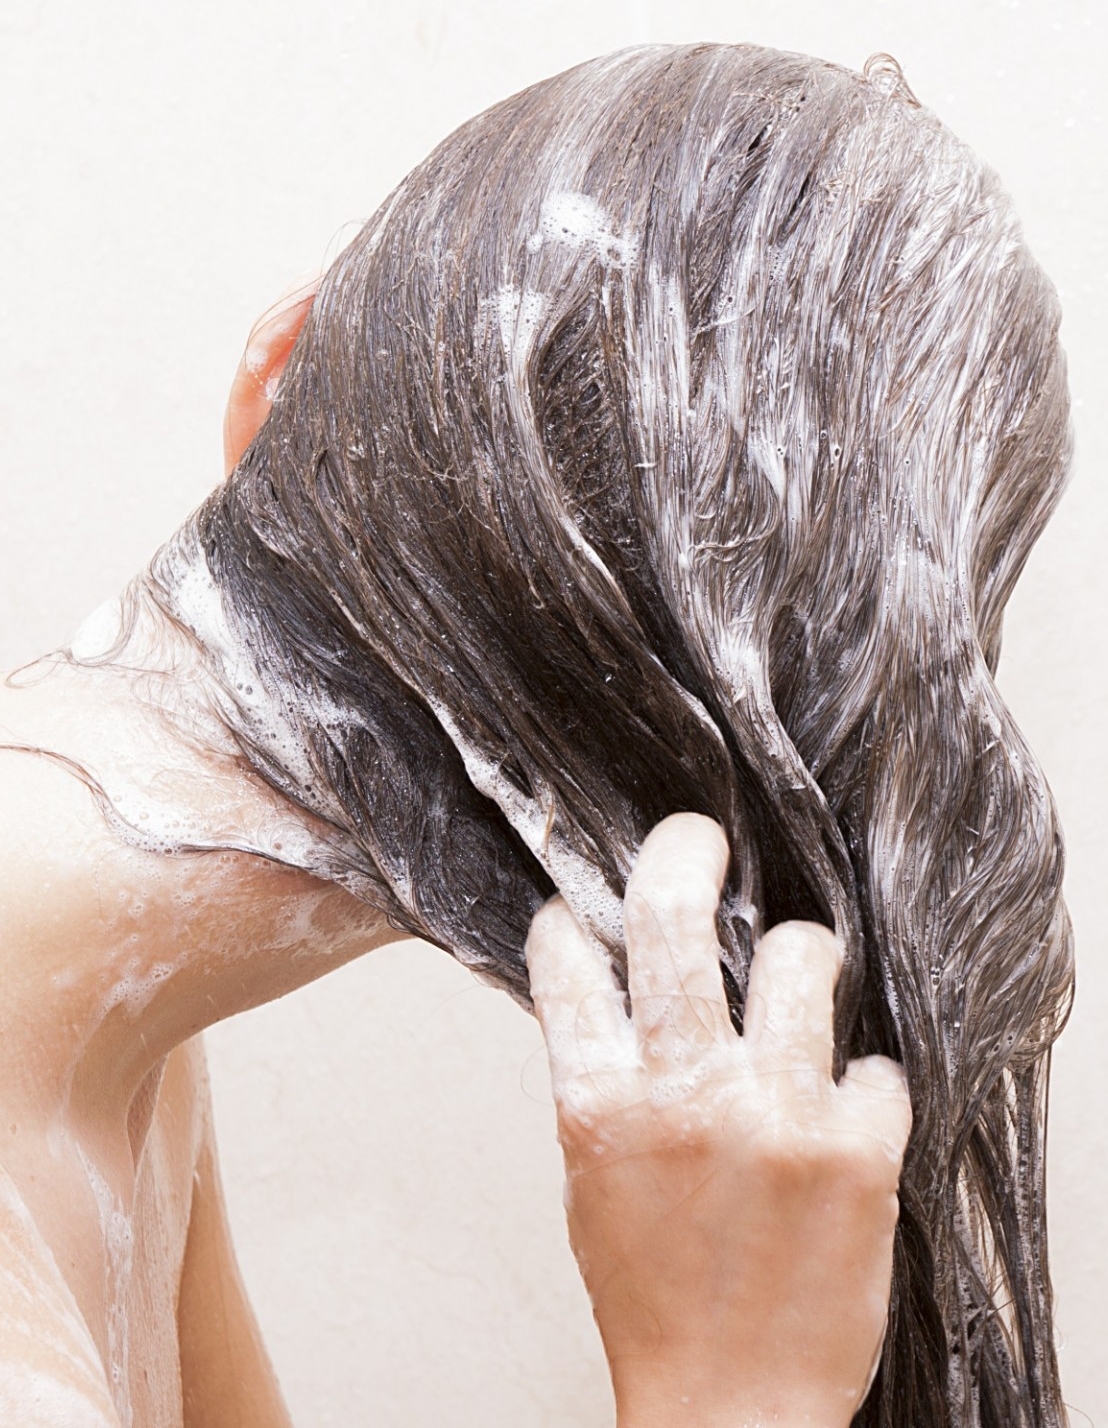 shampoo for hair